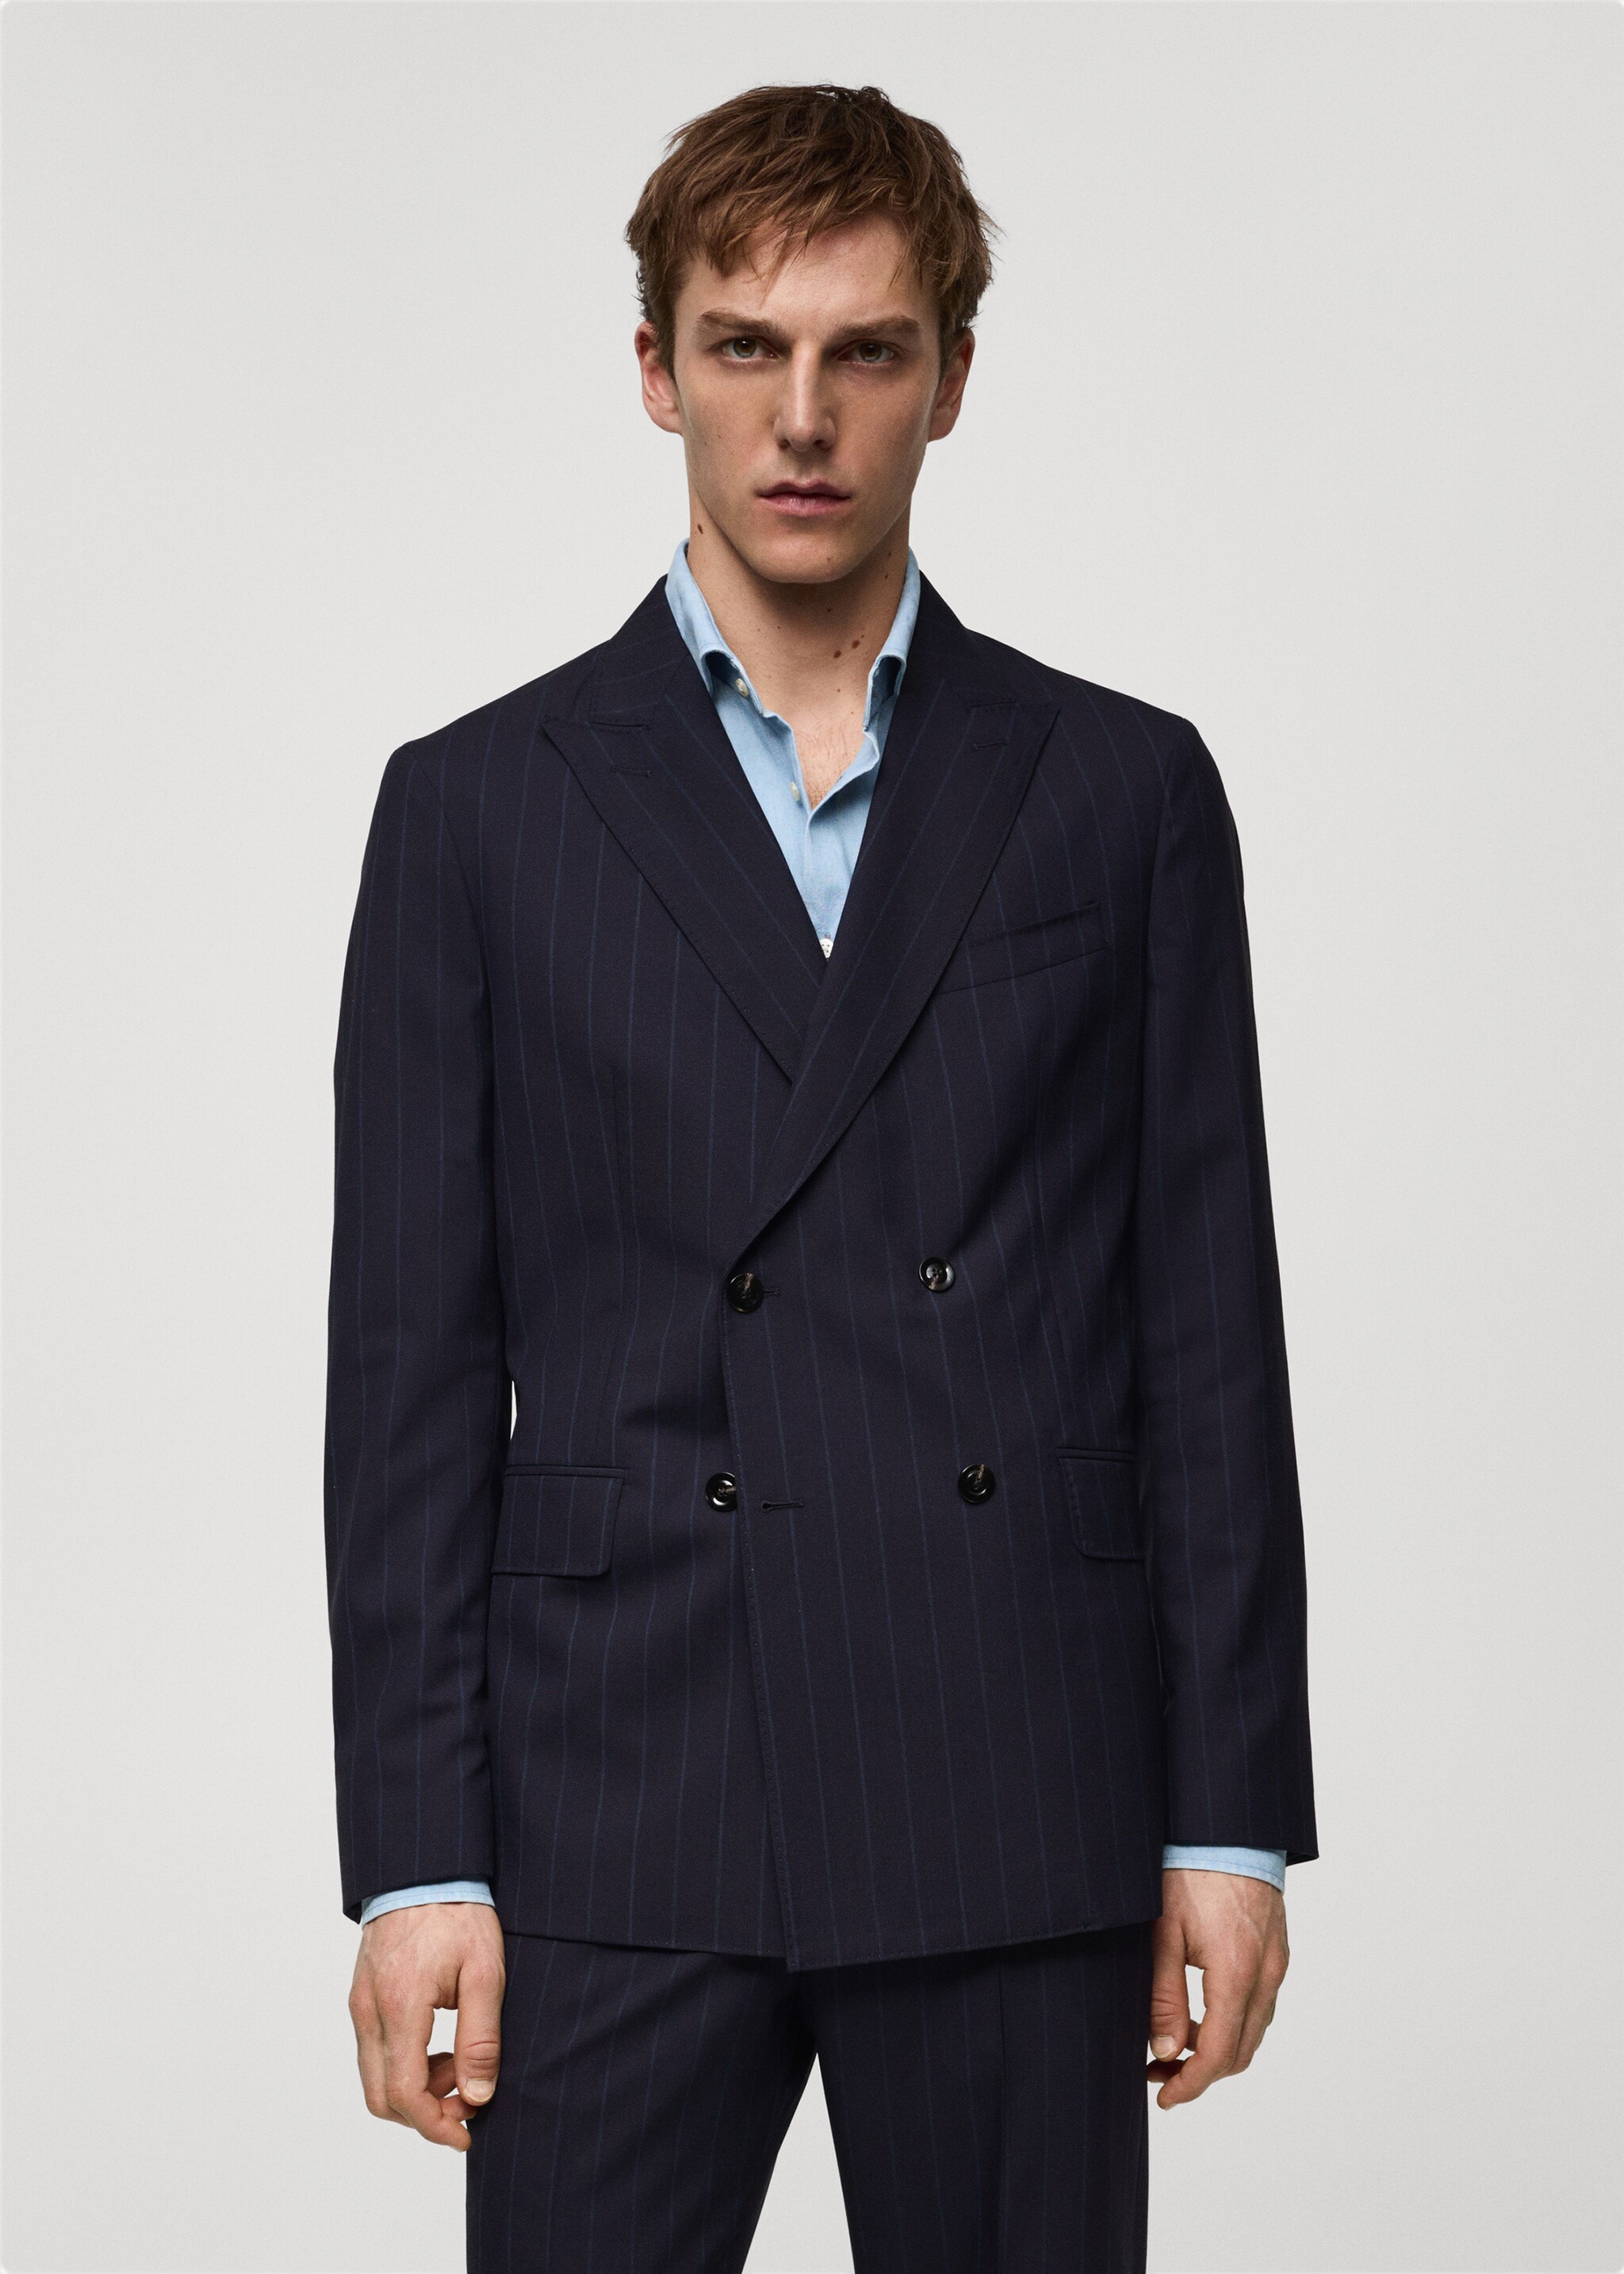 Wool pinstripe double-breasted suit jacket - Medium plane